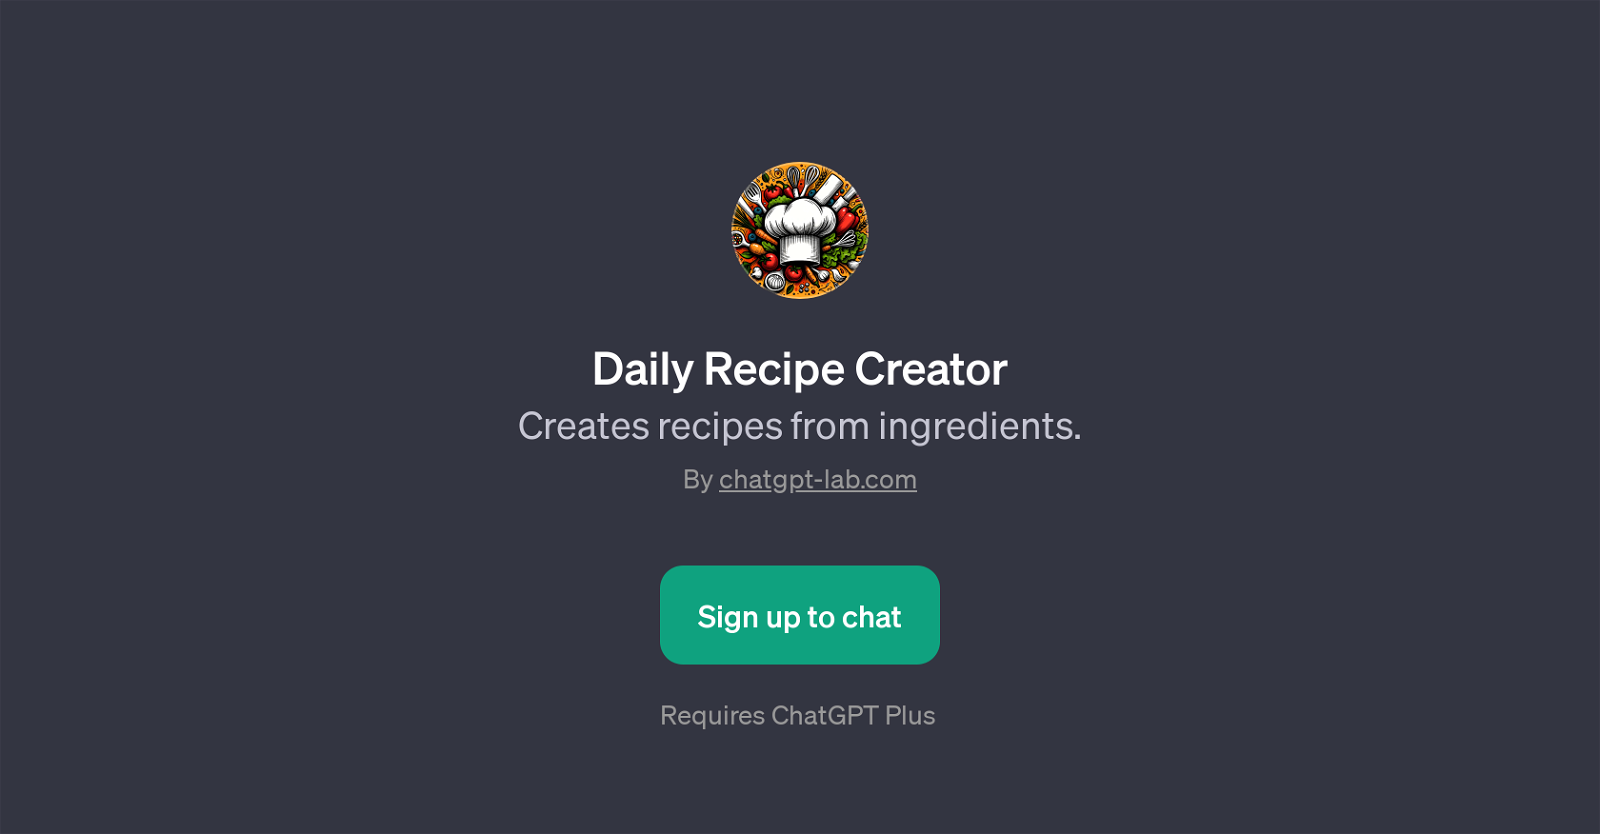 Daily Recipe Creator website